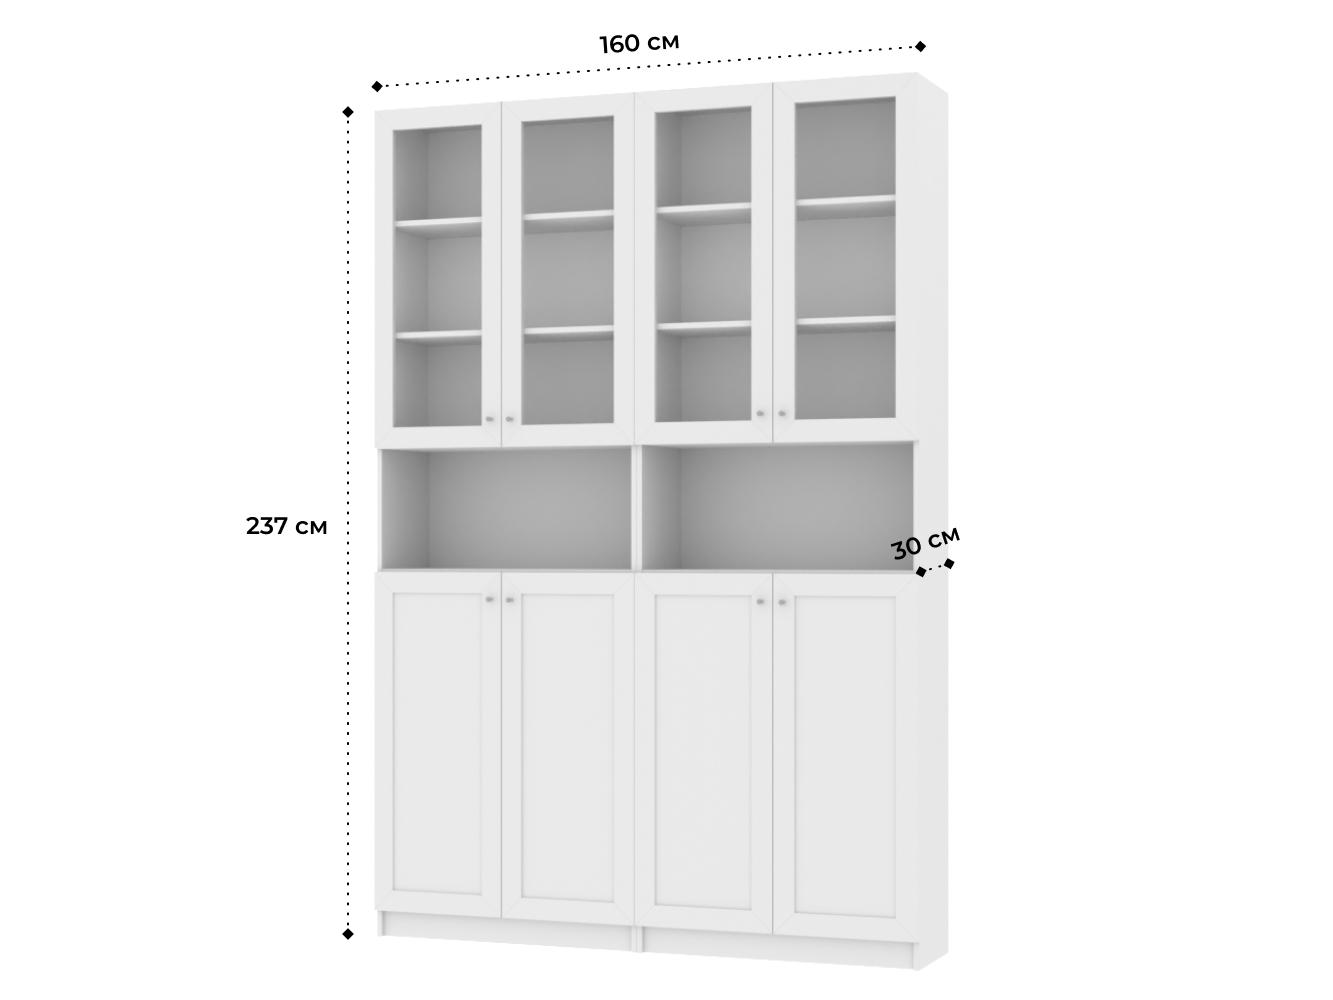  Книжный шкаф Билли 341 white ИКЕА (IKEA) изображение товара